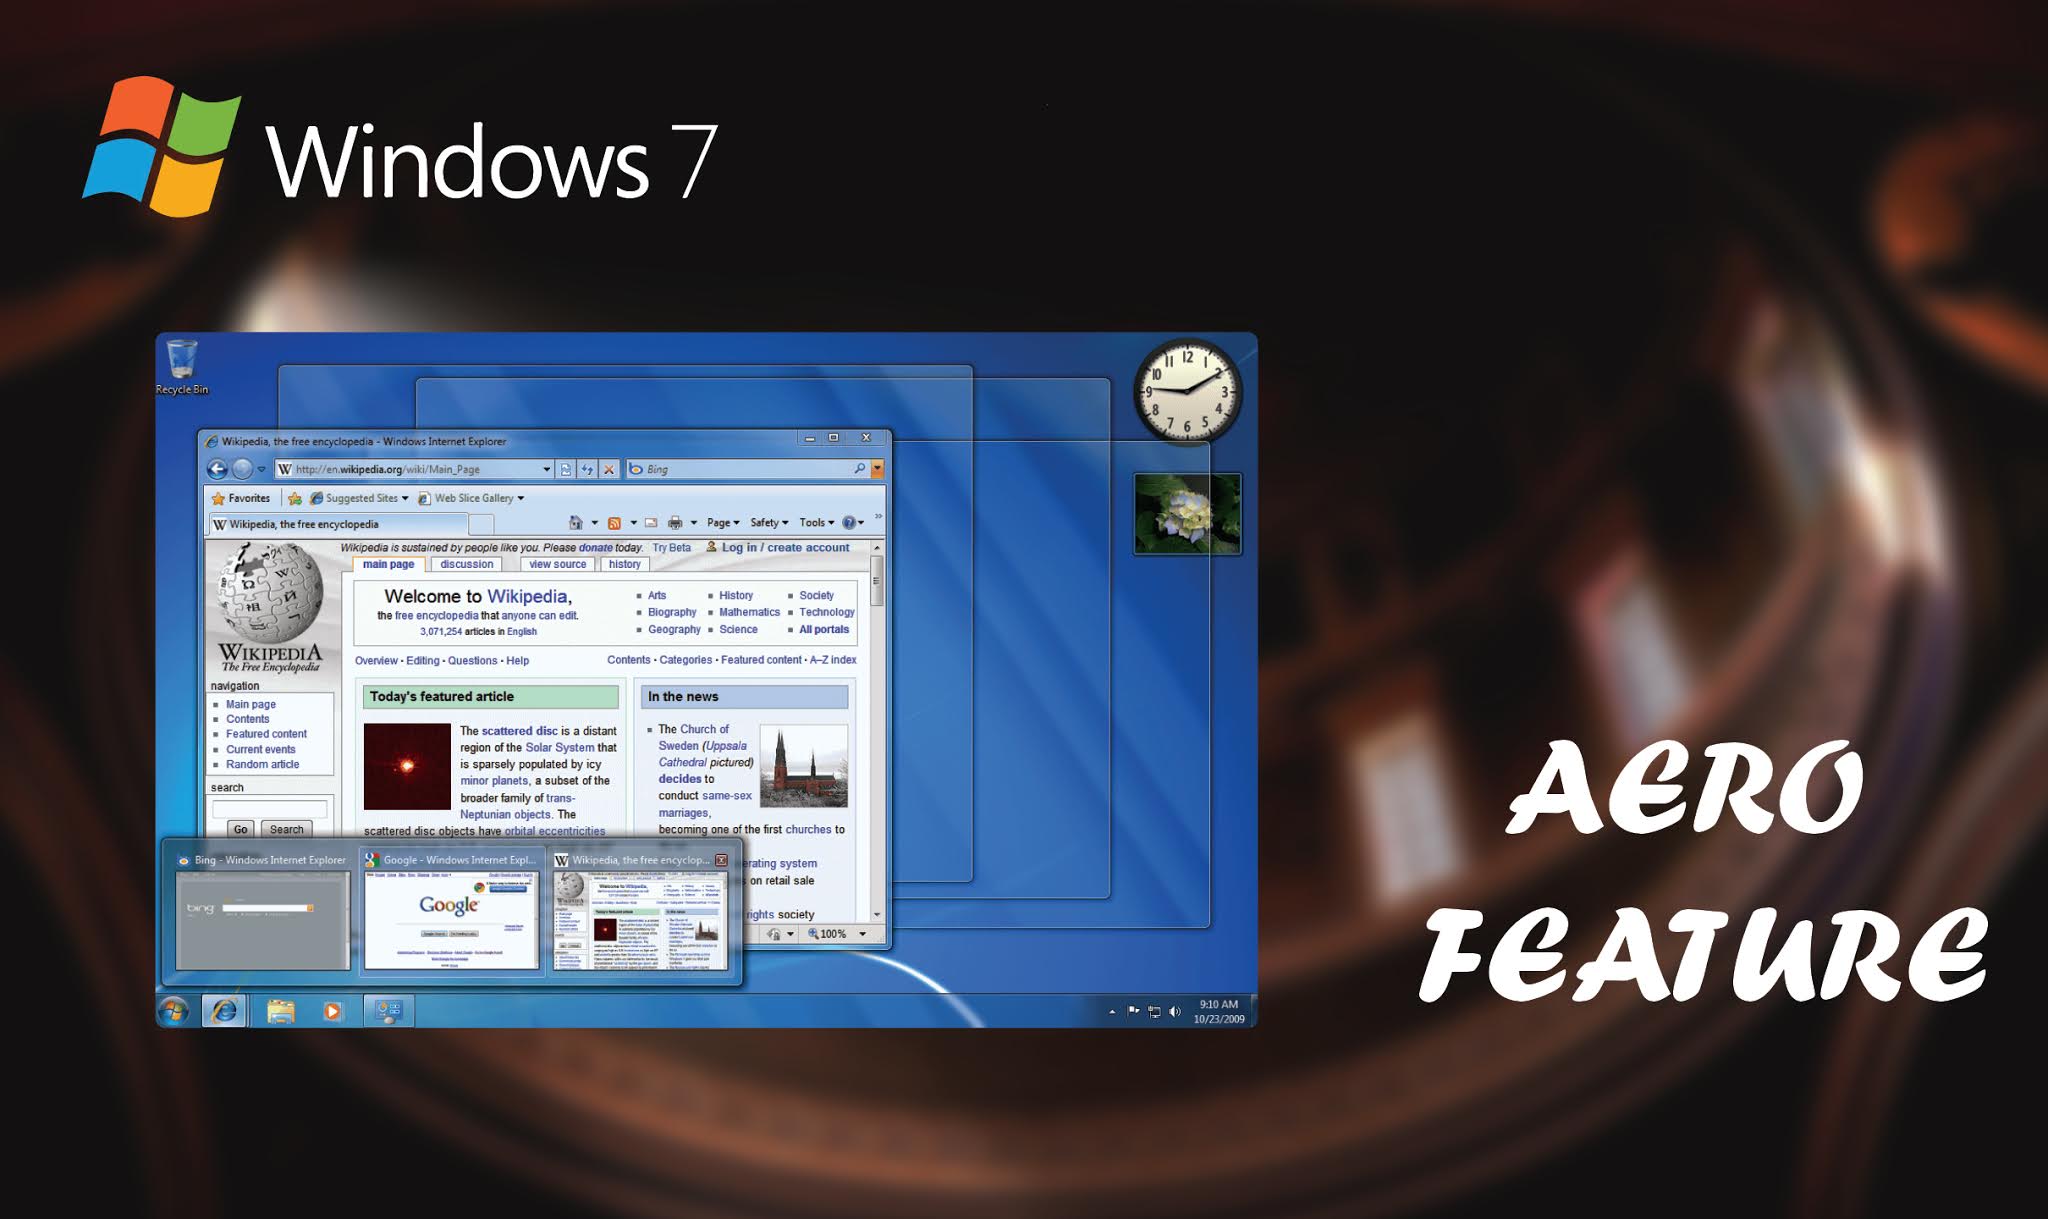 Windows 7 Home Premium is a user-friendly version